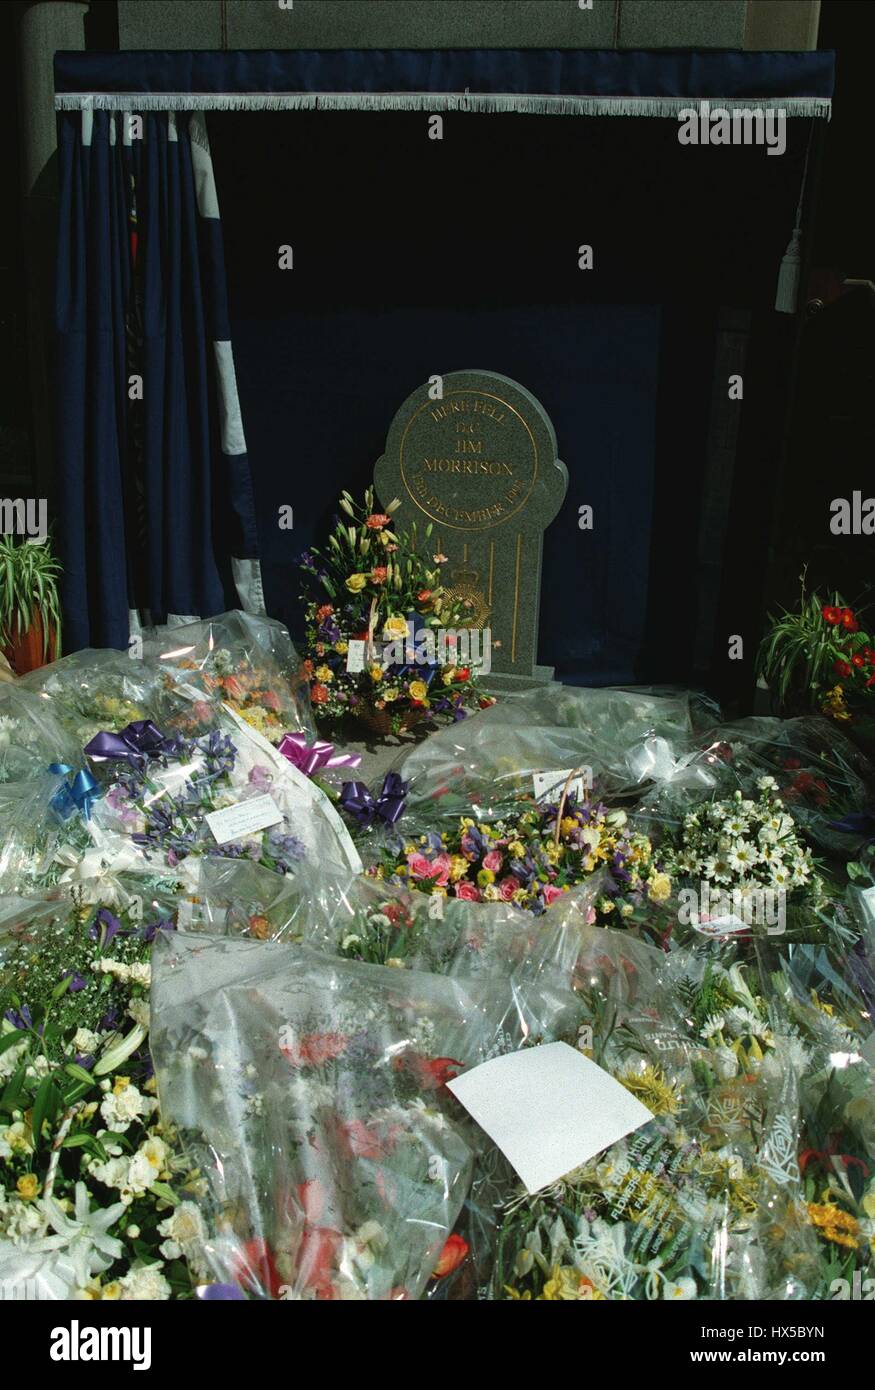 D.C. JIM MORRISONS' FLOWER LADEN MEMORIAL STONE 27 April 1994 Stock Photo